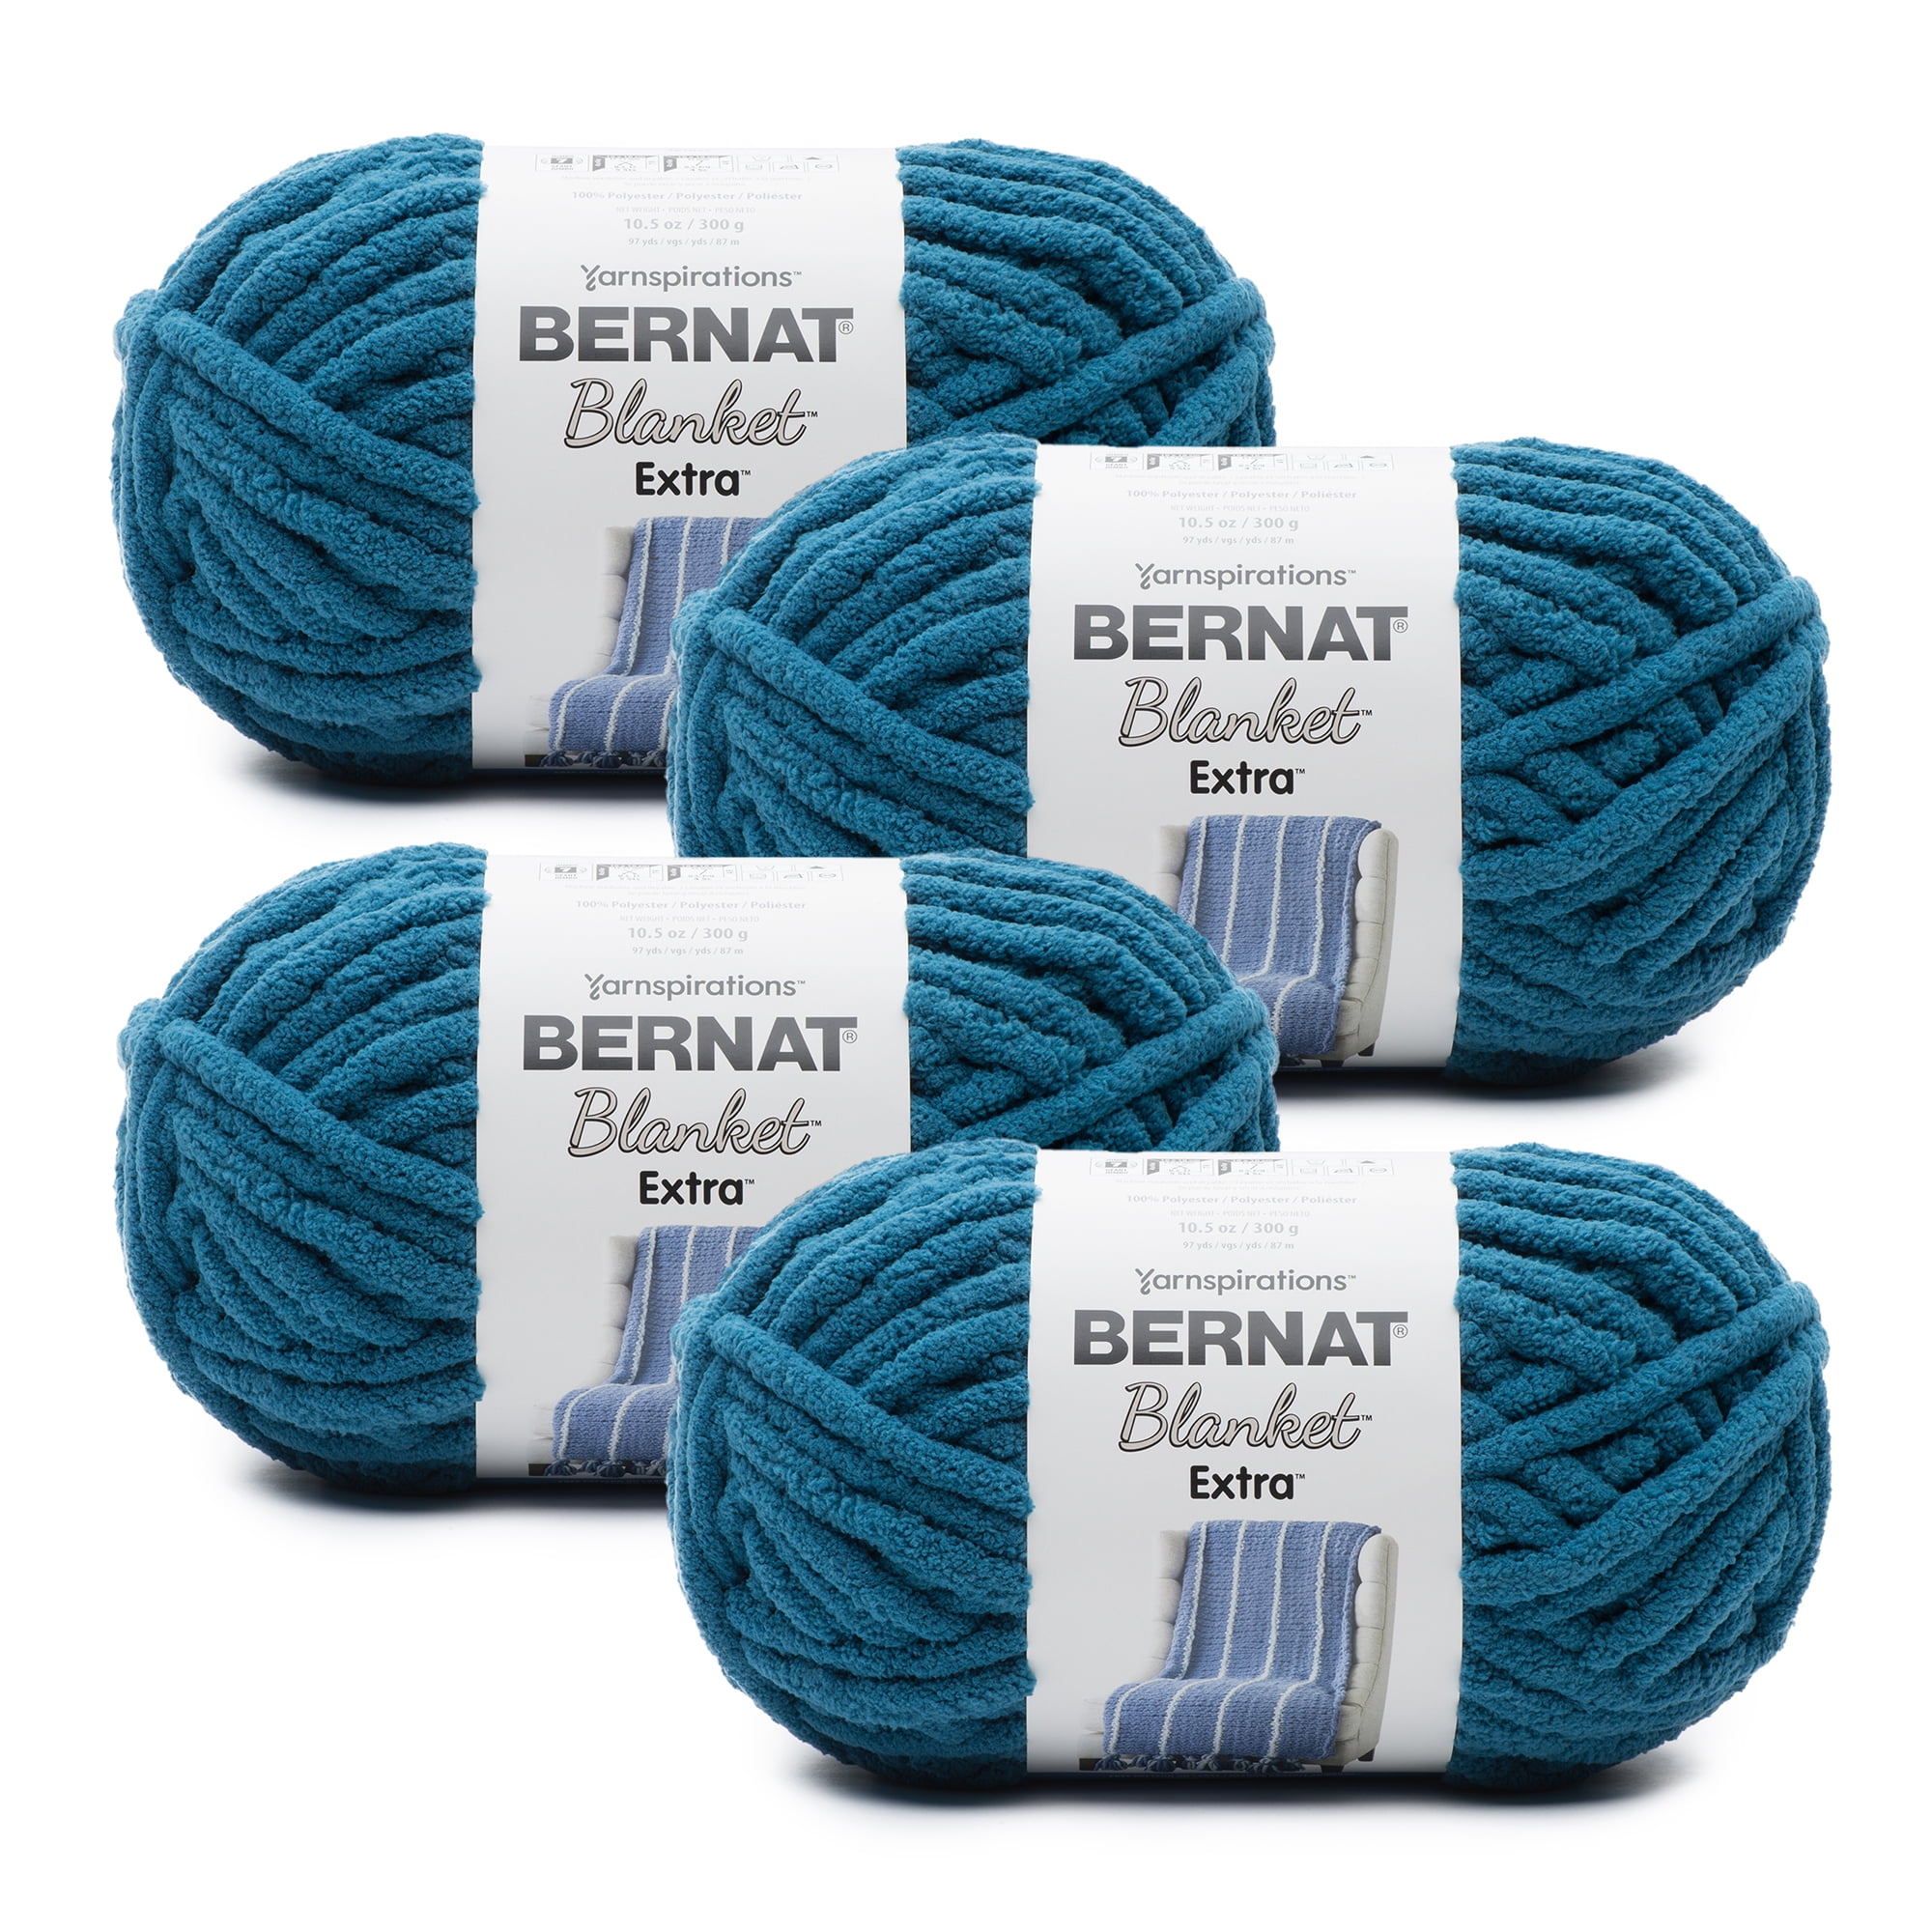 Bernat Yarn Blanket Extra Blanket Yarn, Jumbo Gauge #7, 2-Pack (Softened Blue)